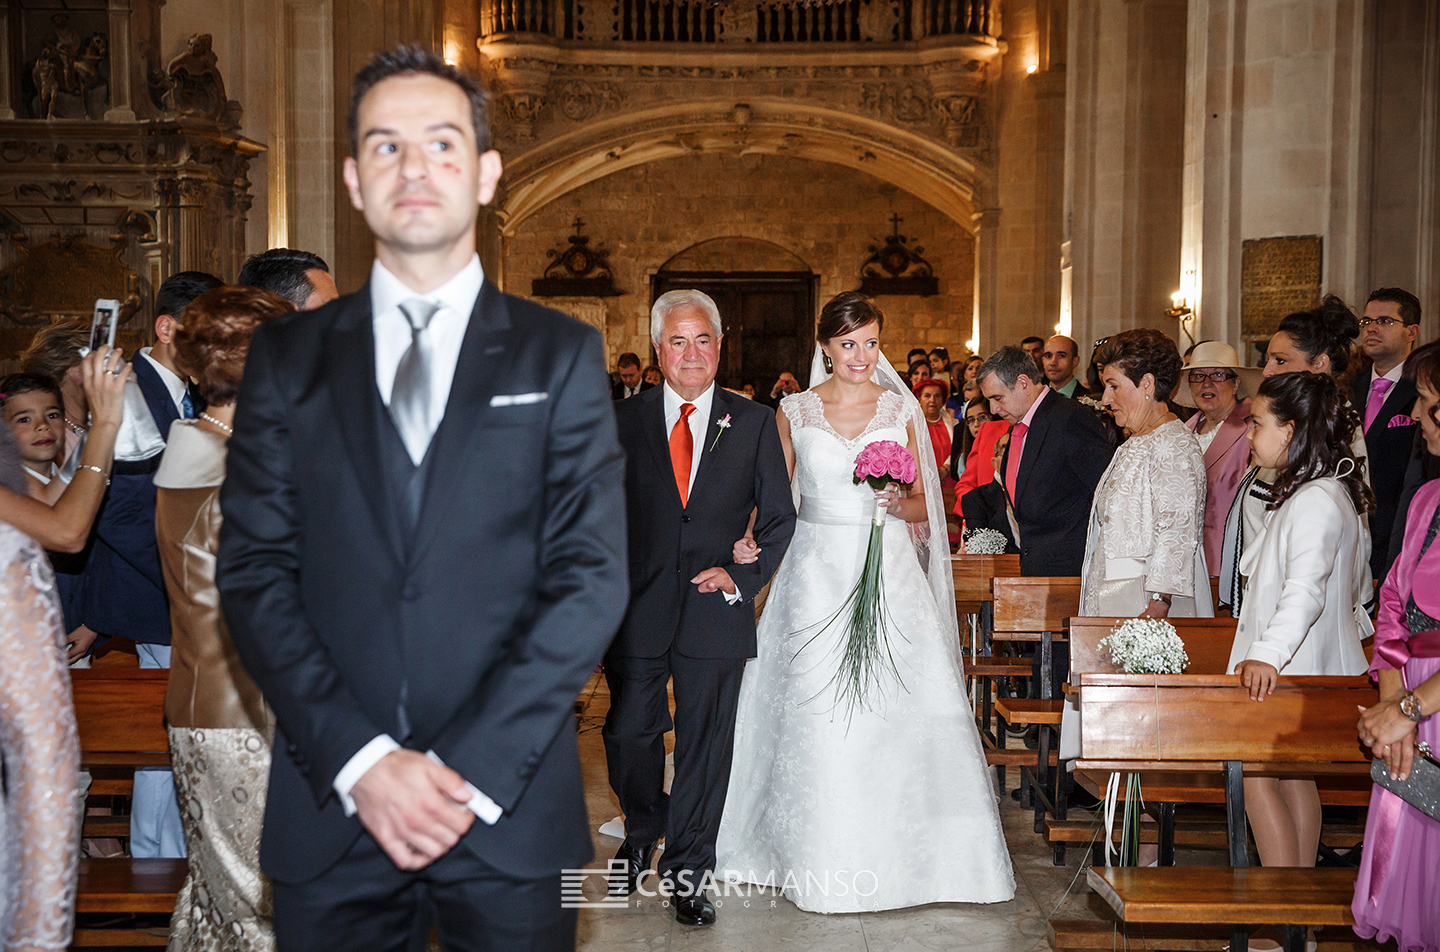 César Manso Fotógrafo: Fotógrafos de boda en Burgos - Boda%20AlejandrayJairo-16.JPG